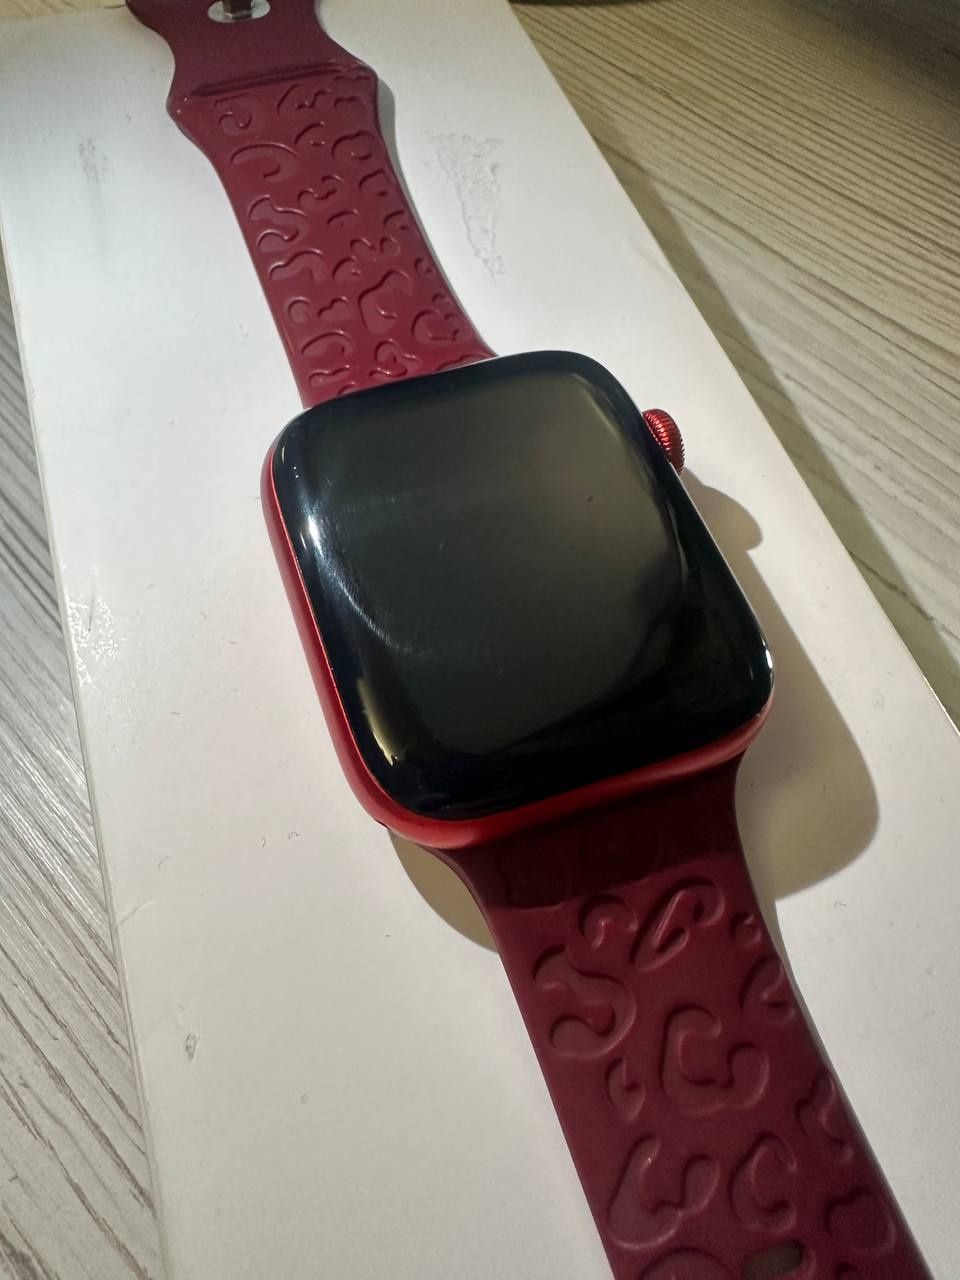 Годинник Apple Watch RED 6 series, 44 mm